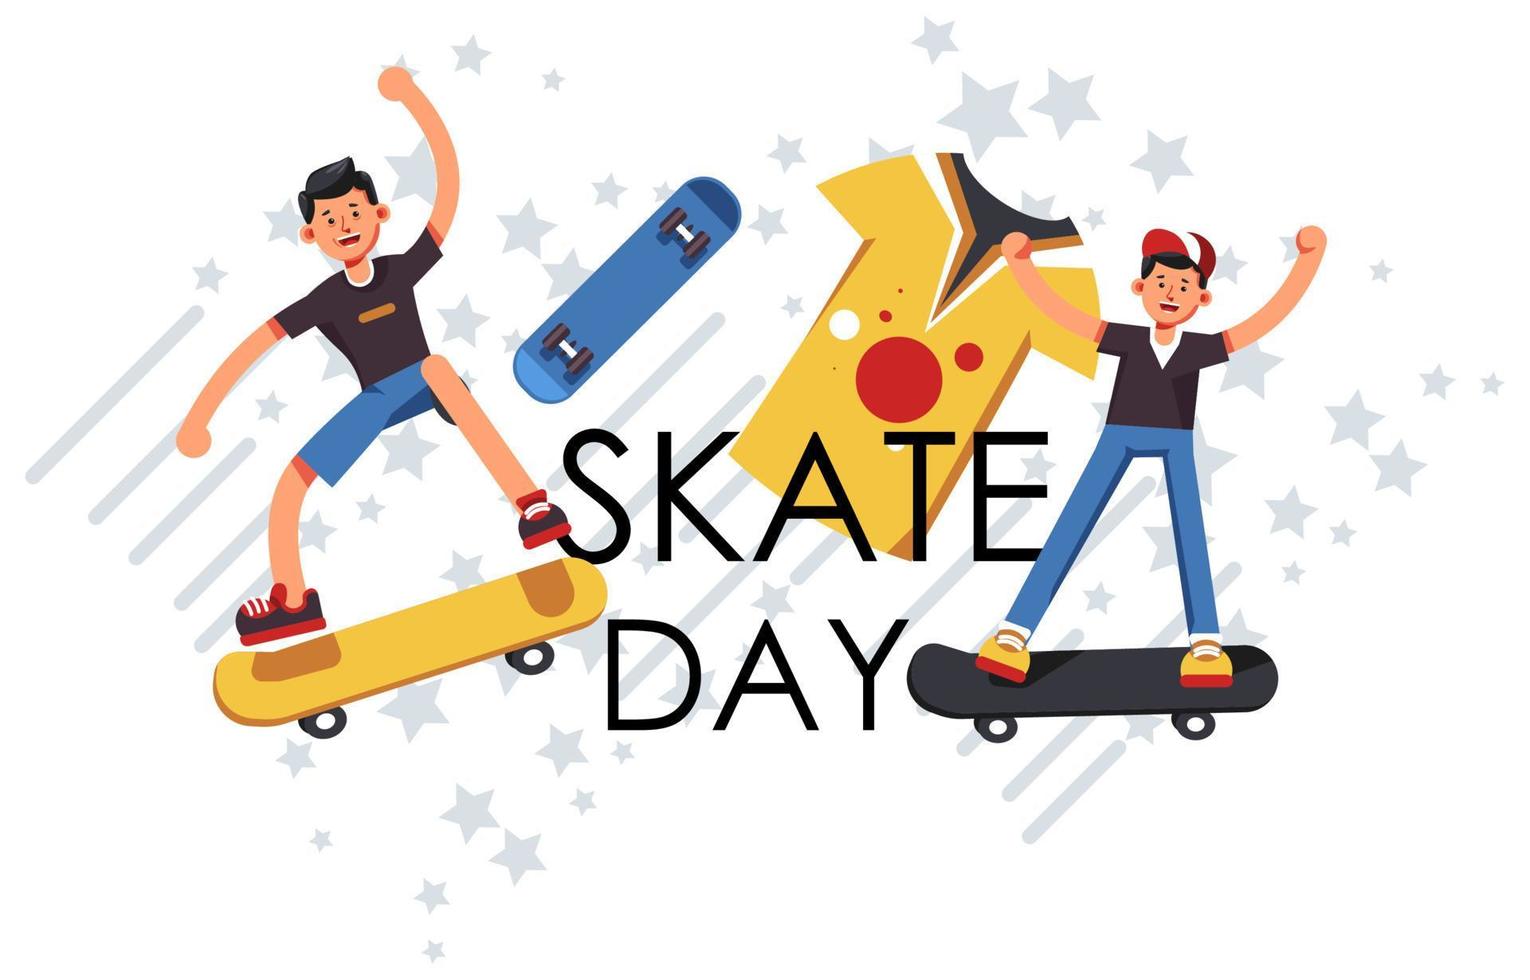 Skate day, teens on boards wearing uniform vector